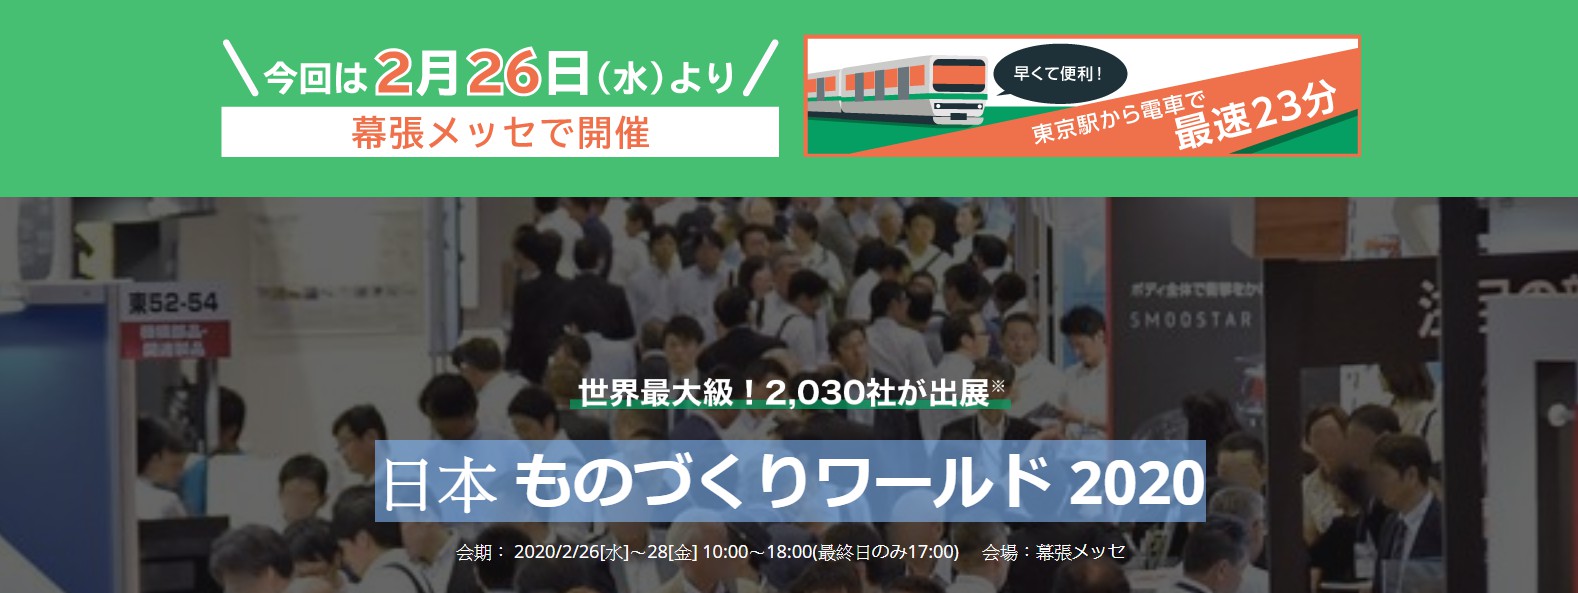 NICHIBO MOTOR (SHENZHEN) ATTENDS MANUFACTURING WORLD JAPAN 2020